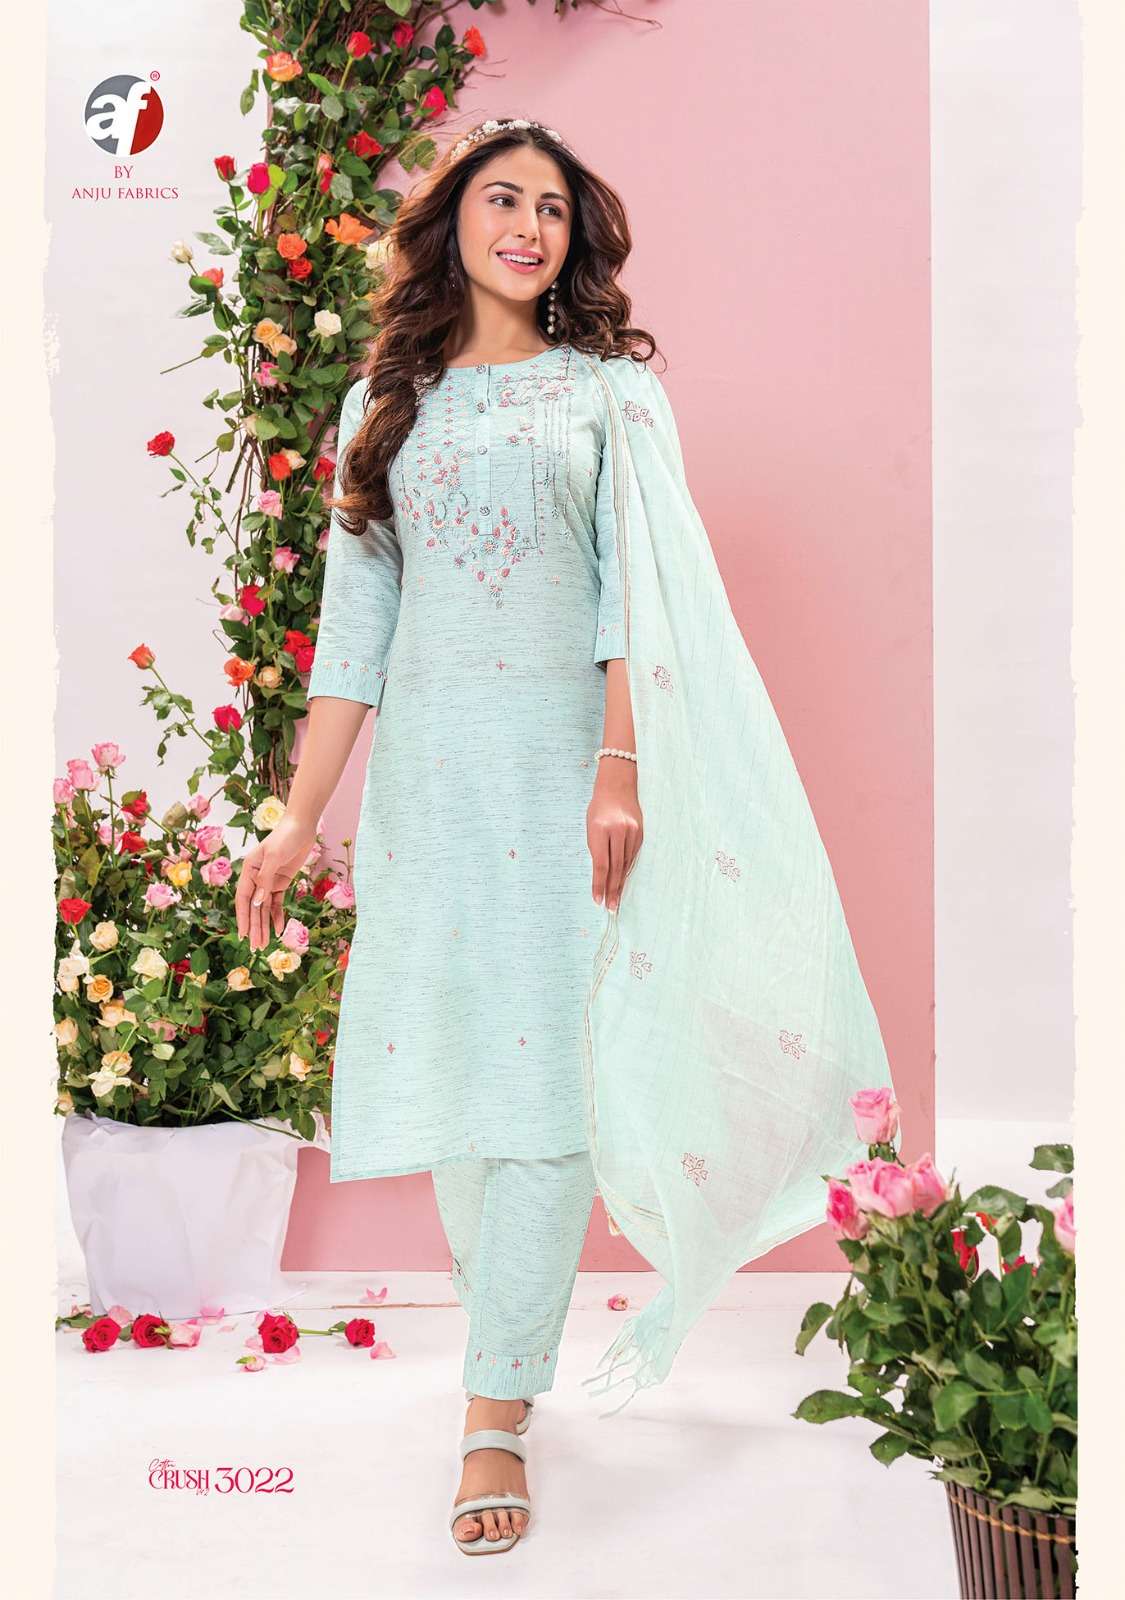 anju fabrics cotton crush vol-2 3021-3026 series exclusive designer kurtis catalogue wholesale price surat